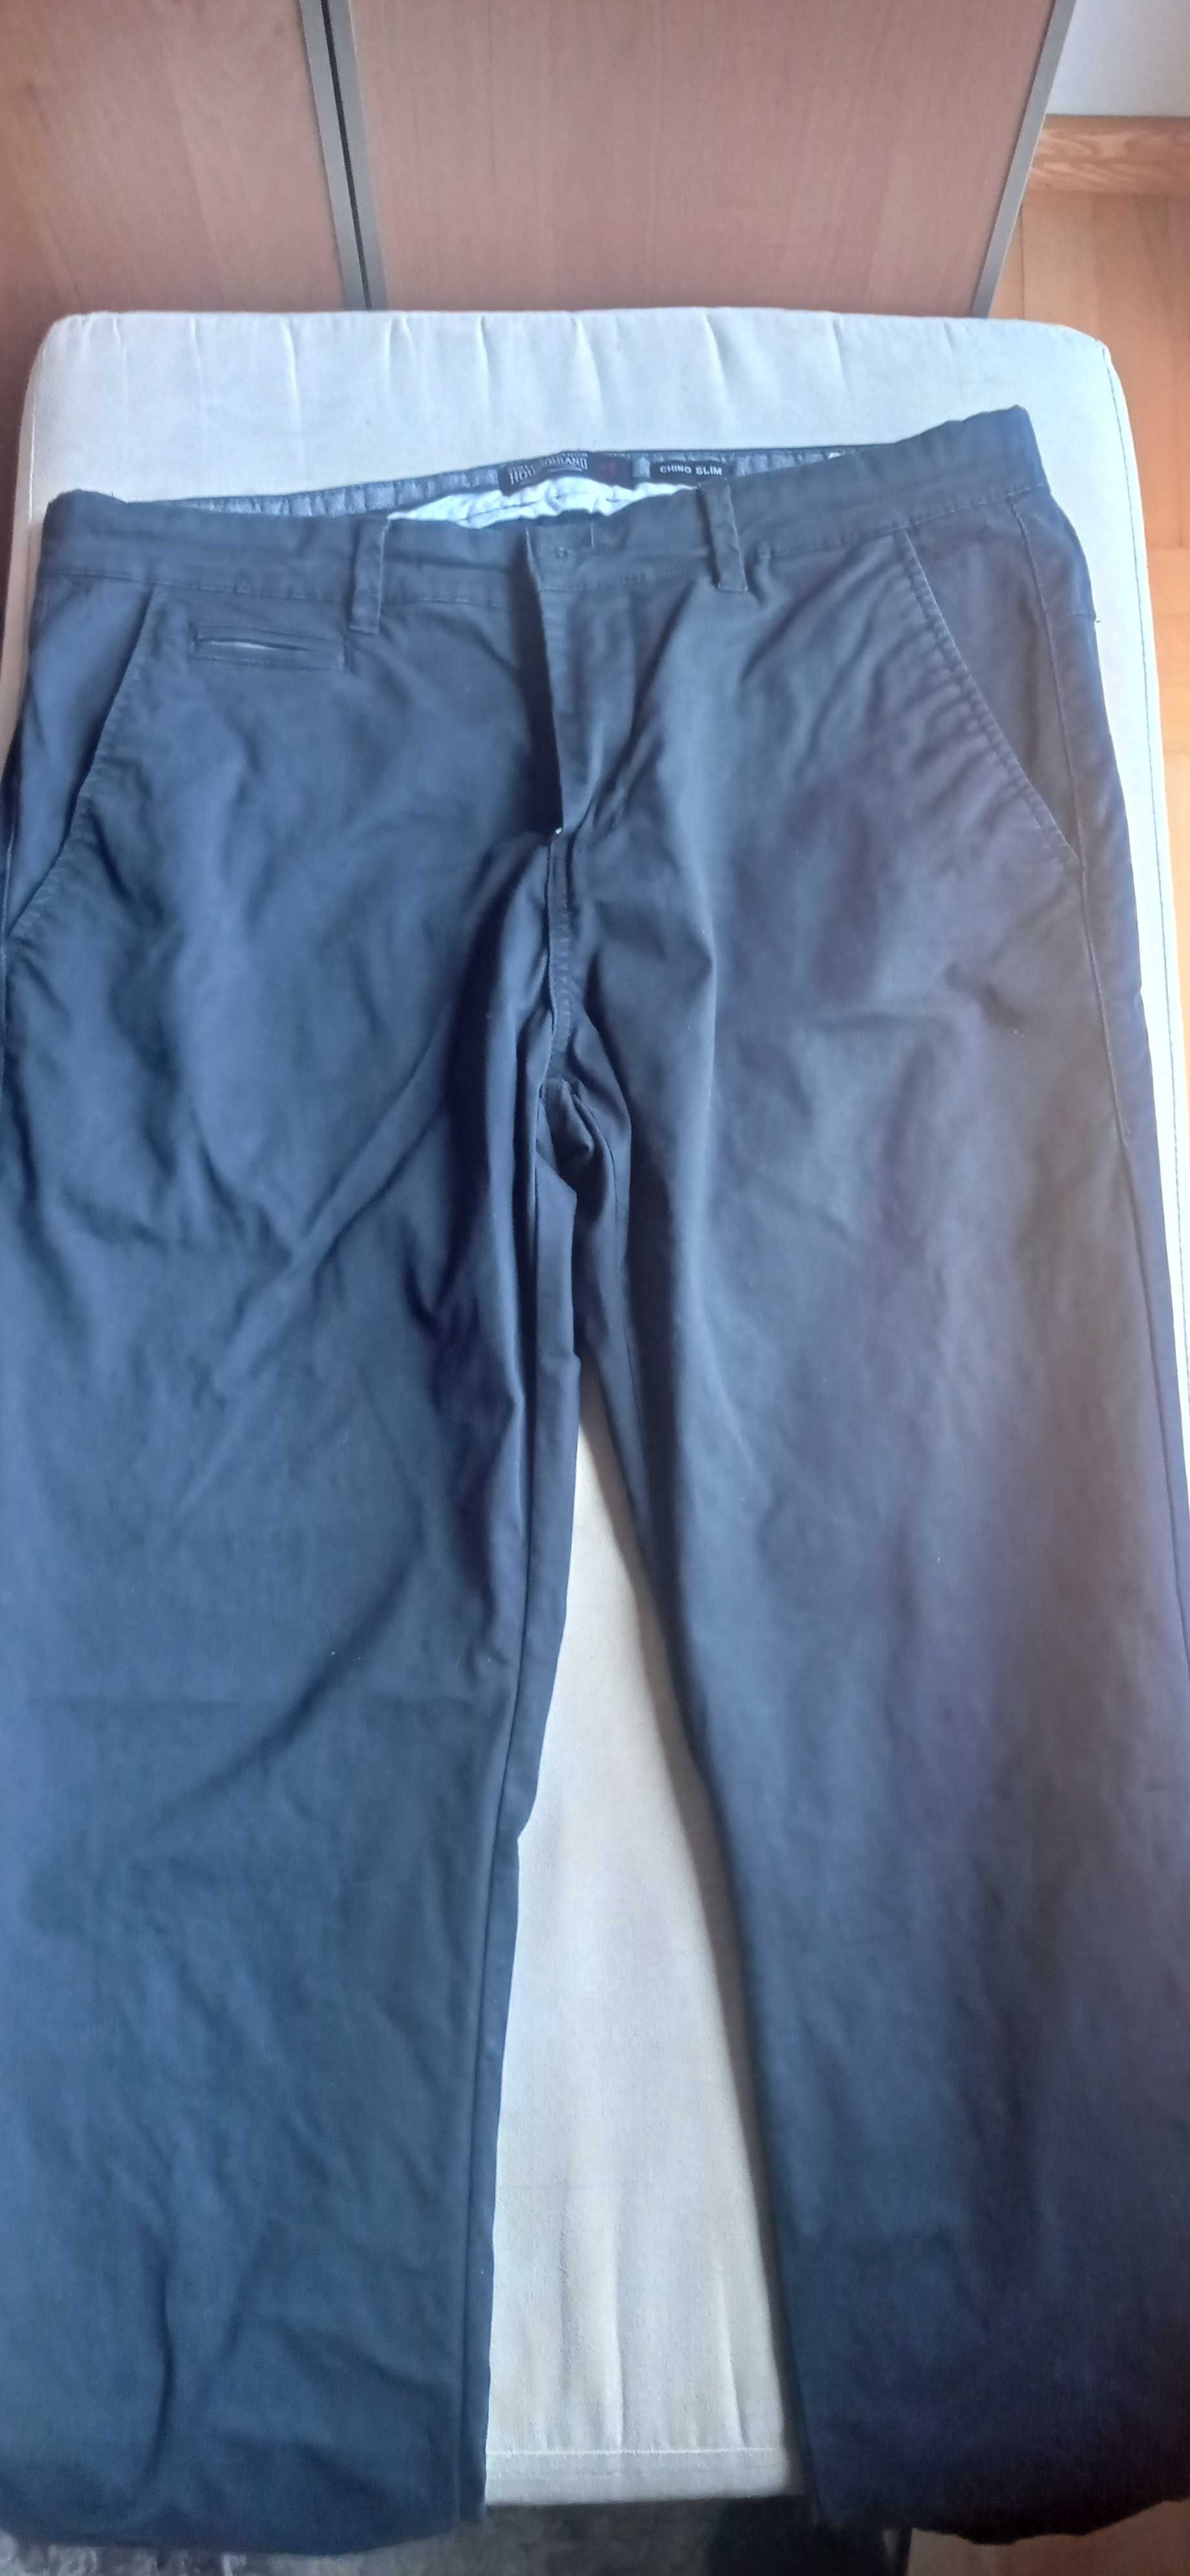 Spodnie męskie rozmiar L